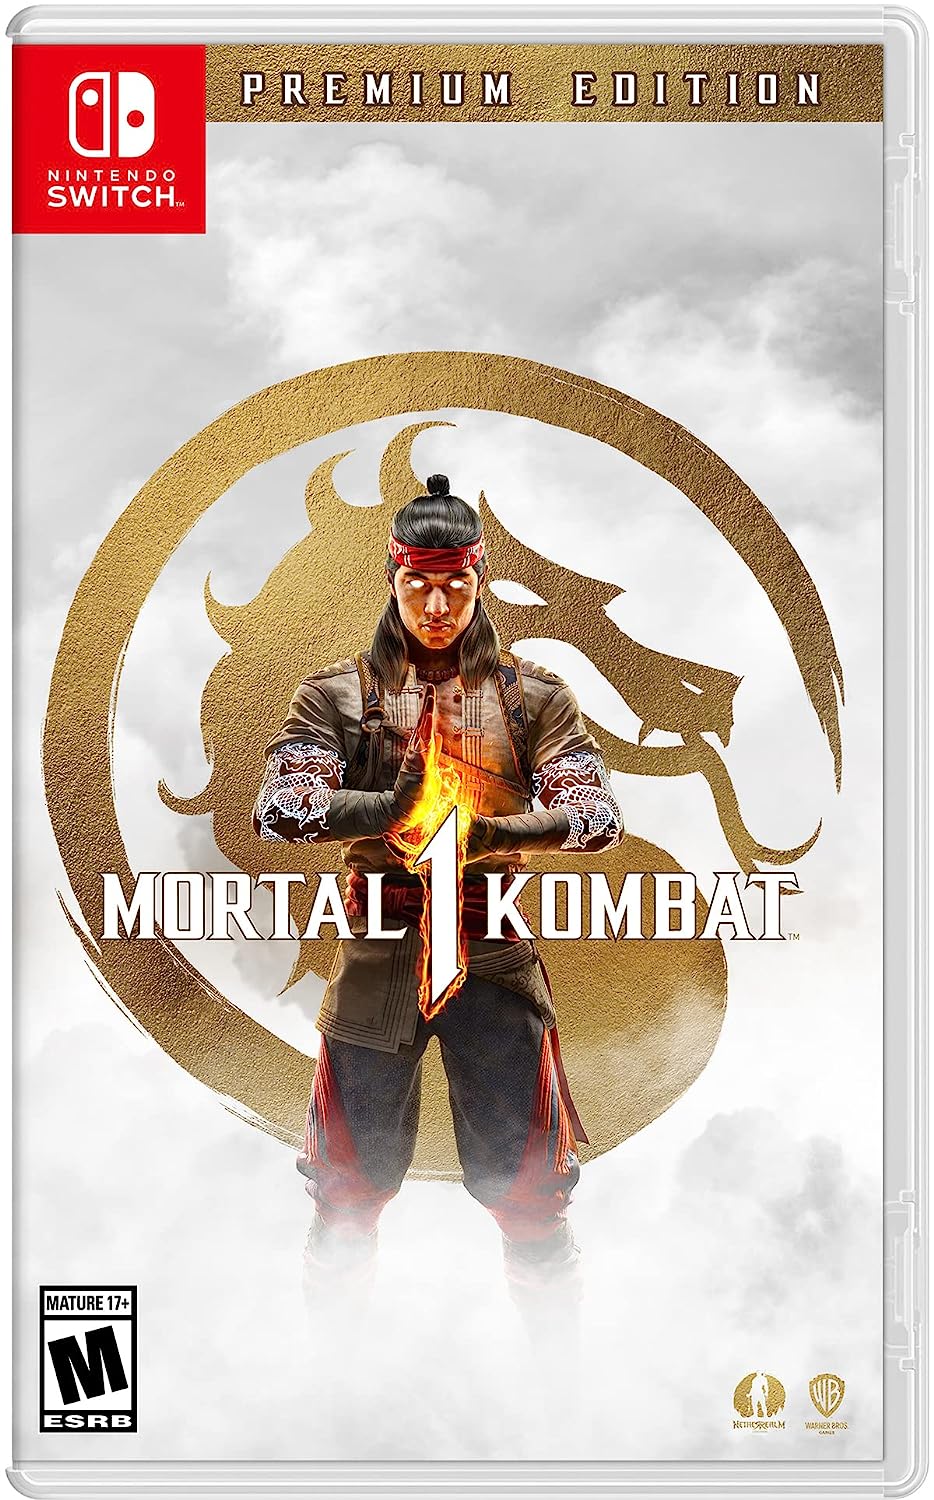 History Of Baraka Mortal Kombat 11 REMASTERED 